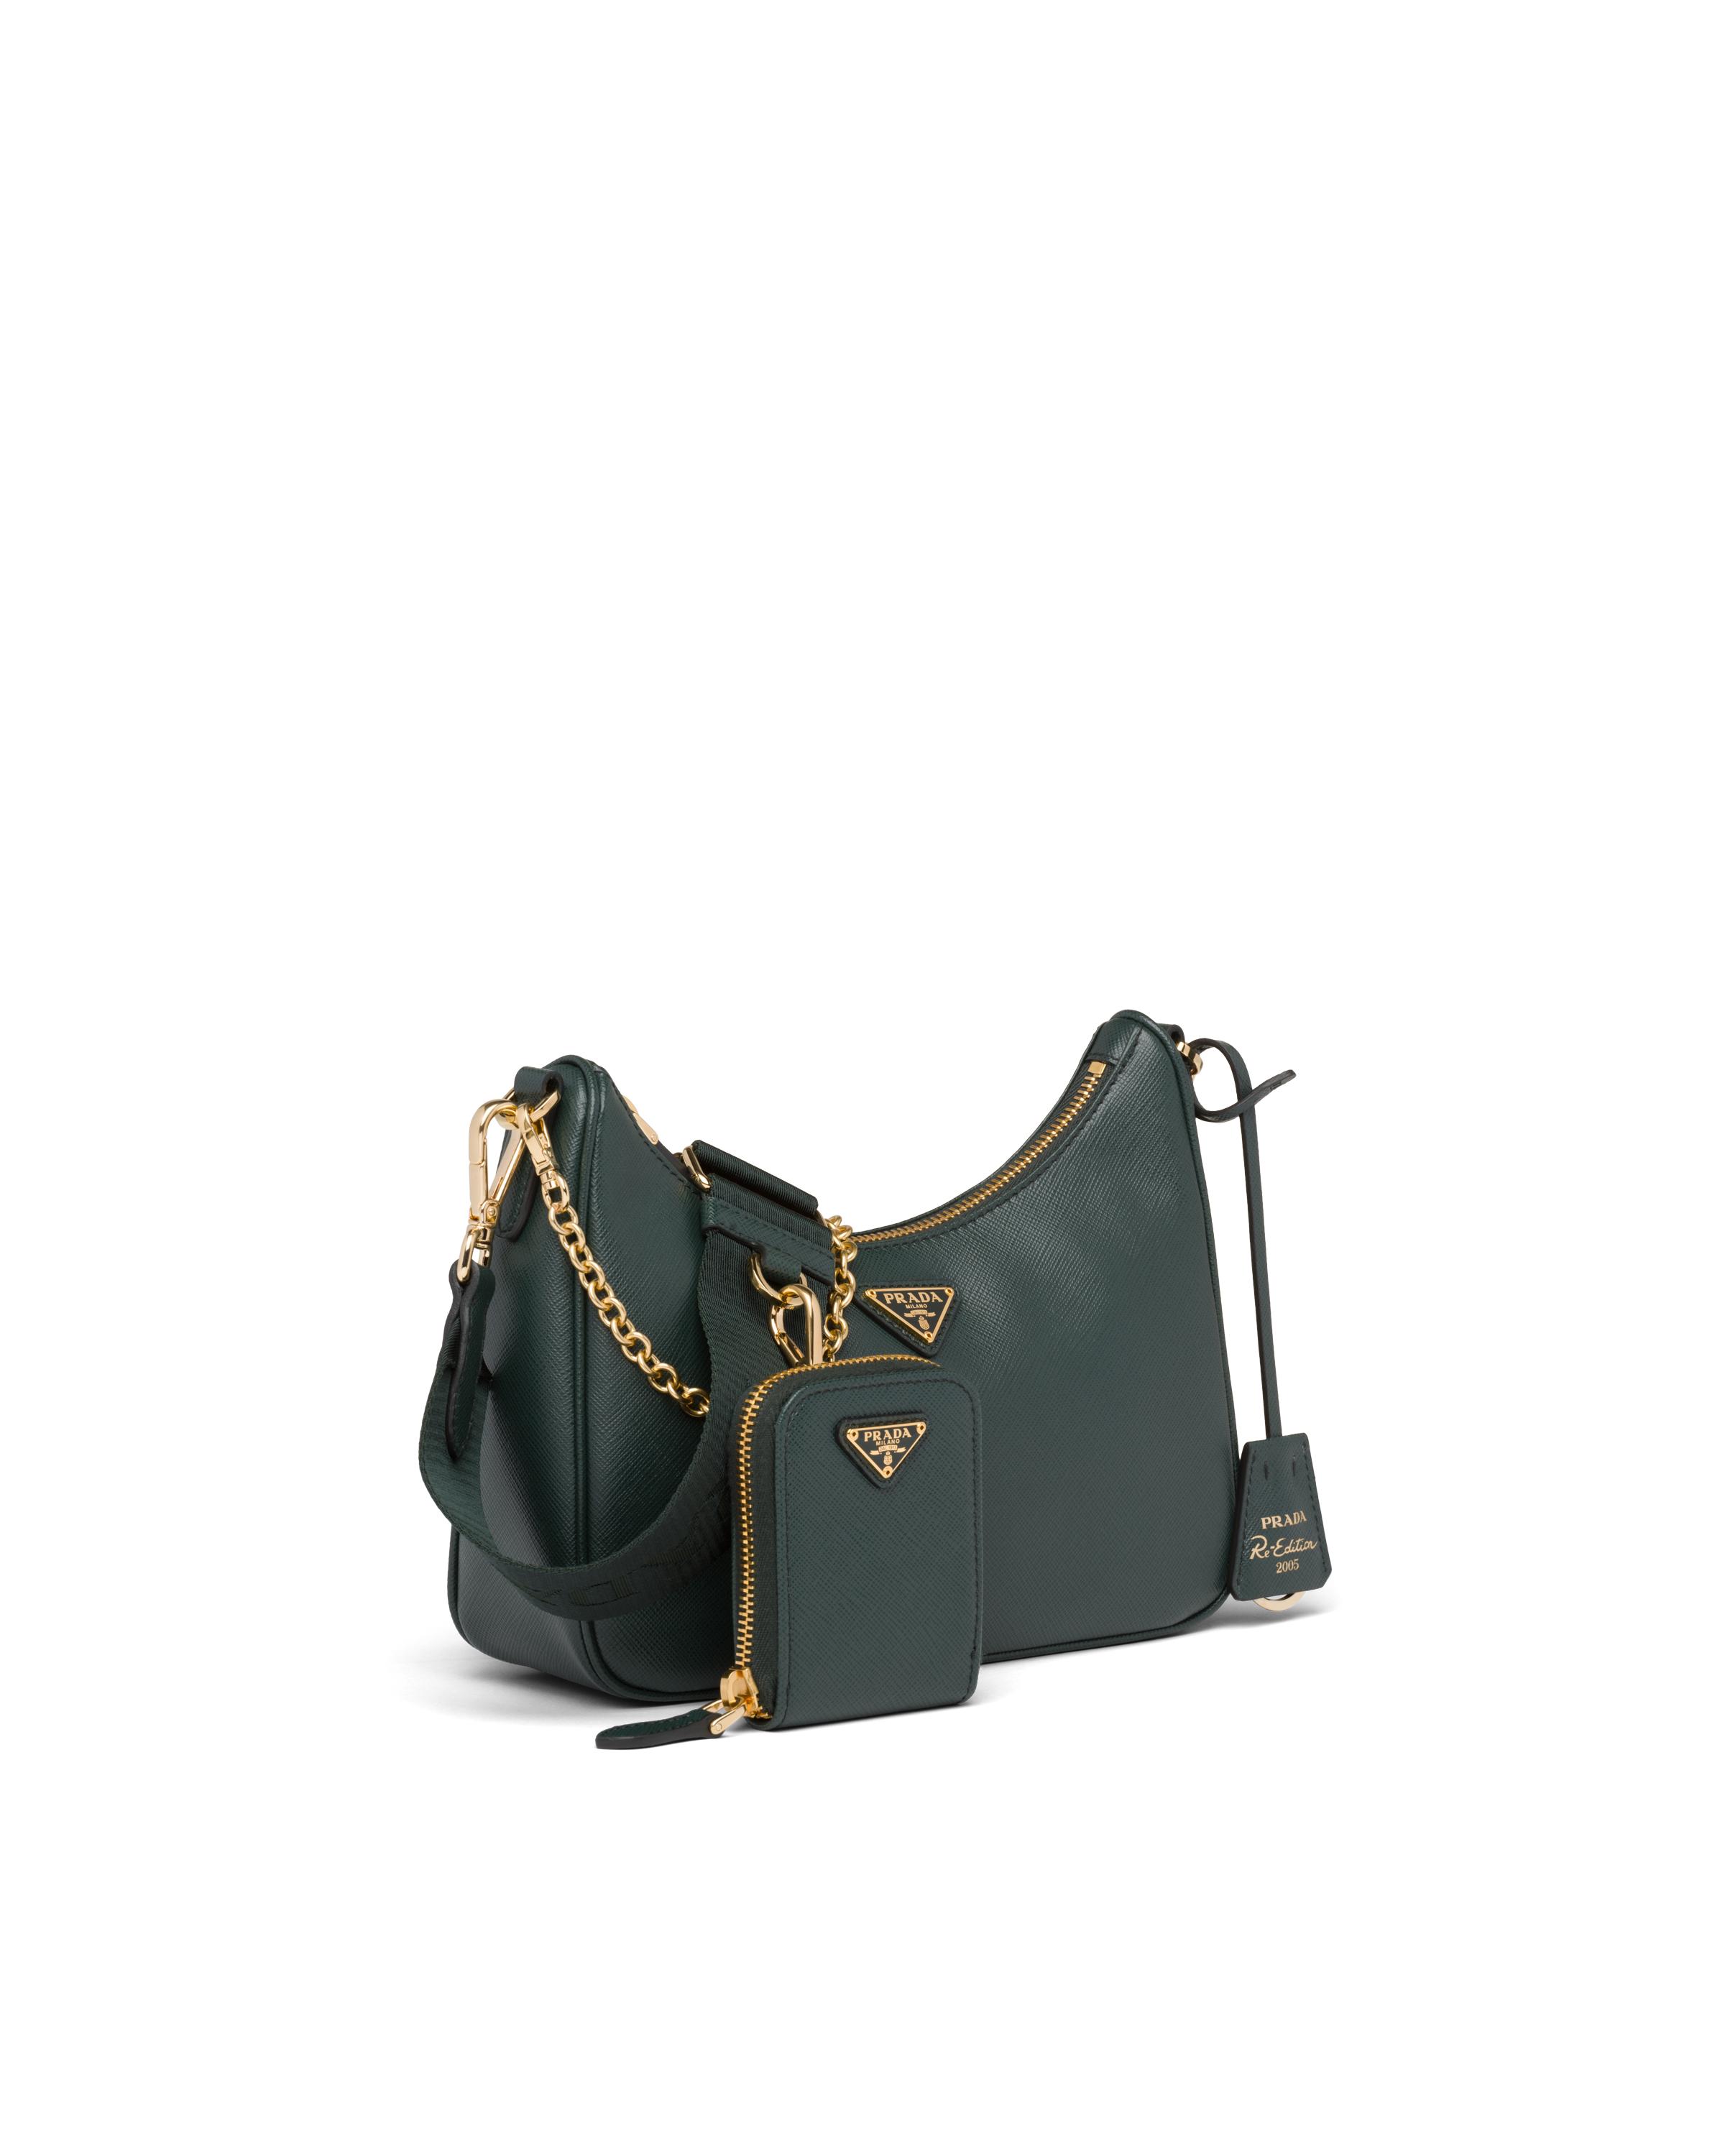 PRADA Re-Edition 2005 Saffiano Leather Shoulder Bag Emerald Green